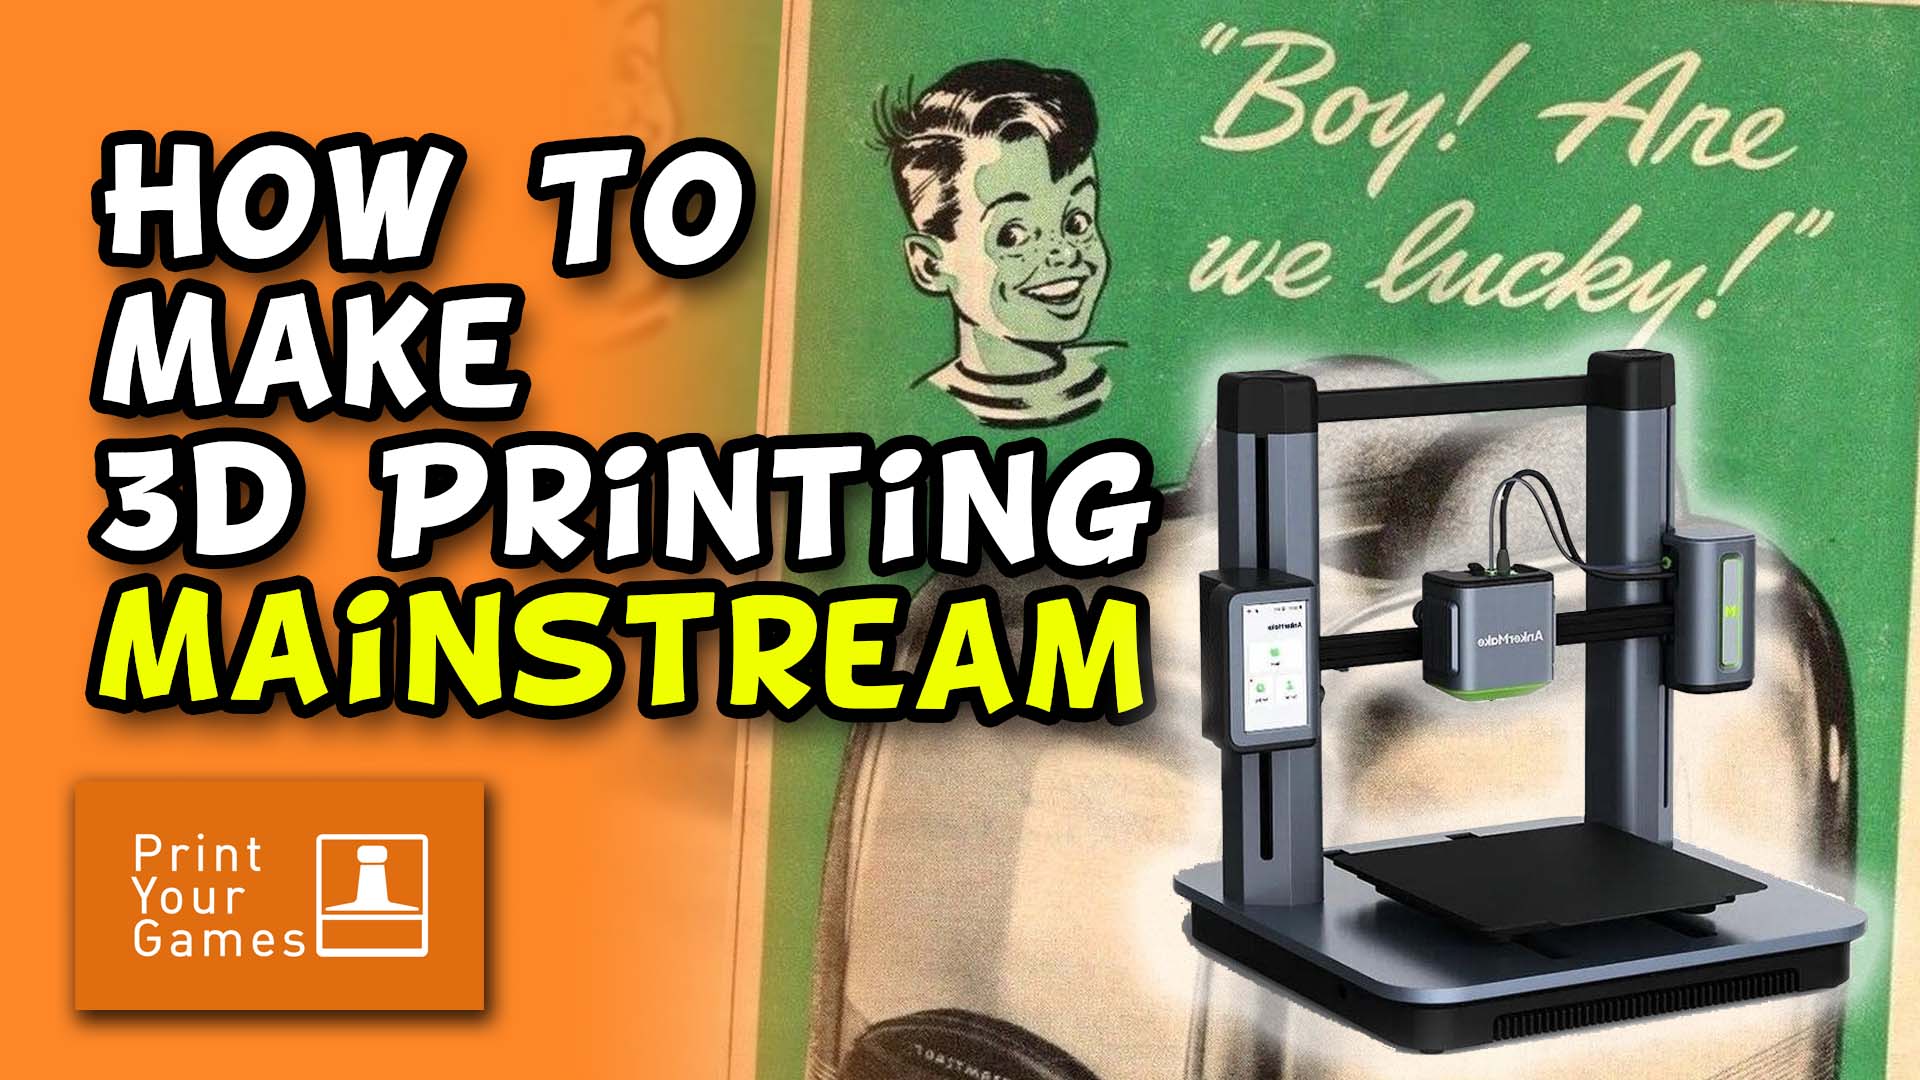 How to make 3d Printing Mainstream